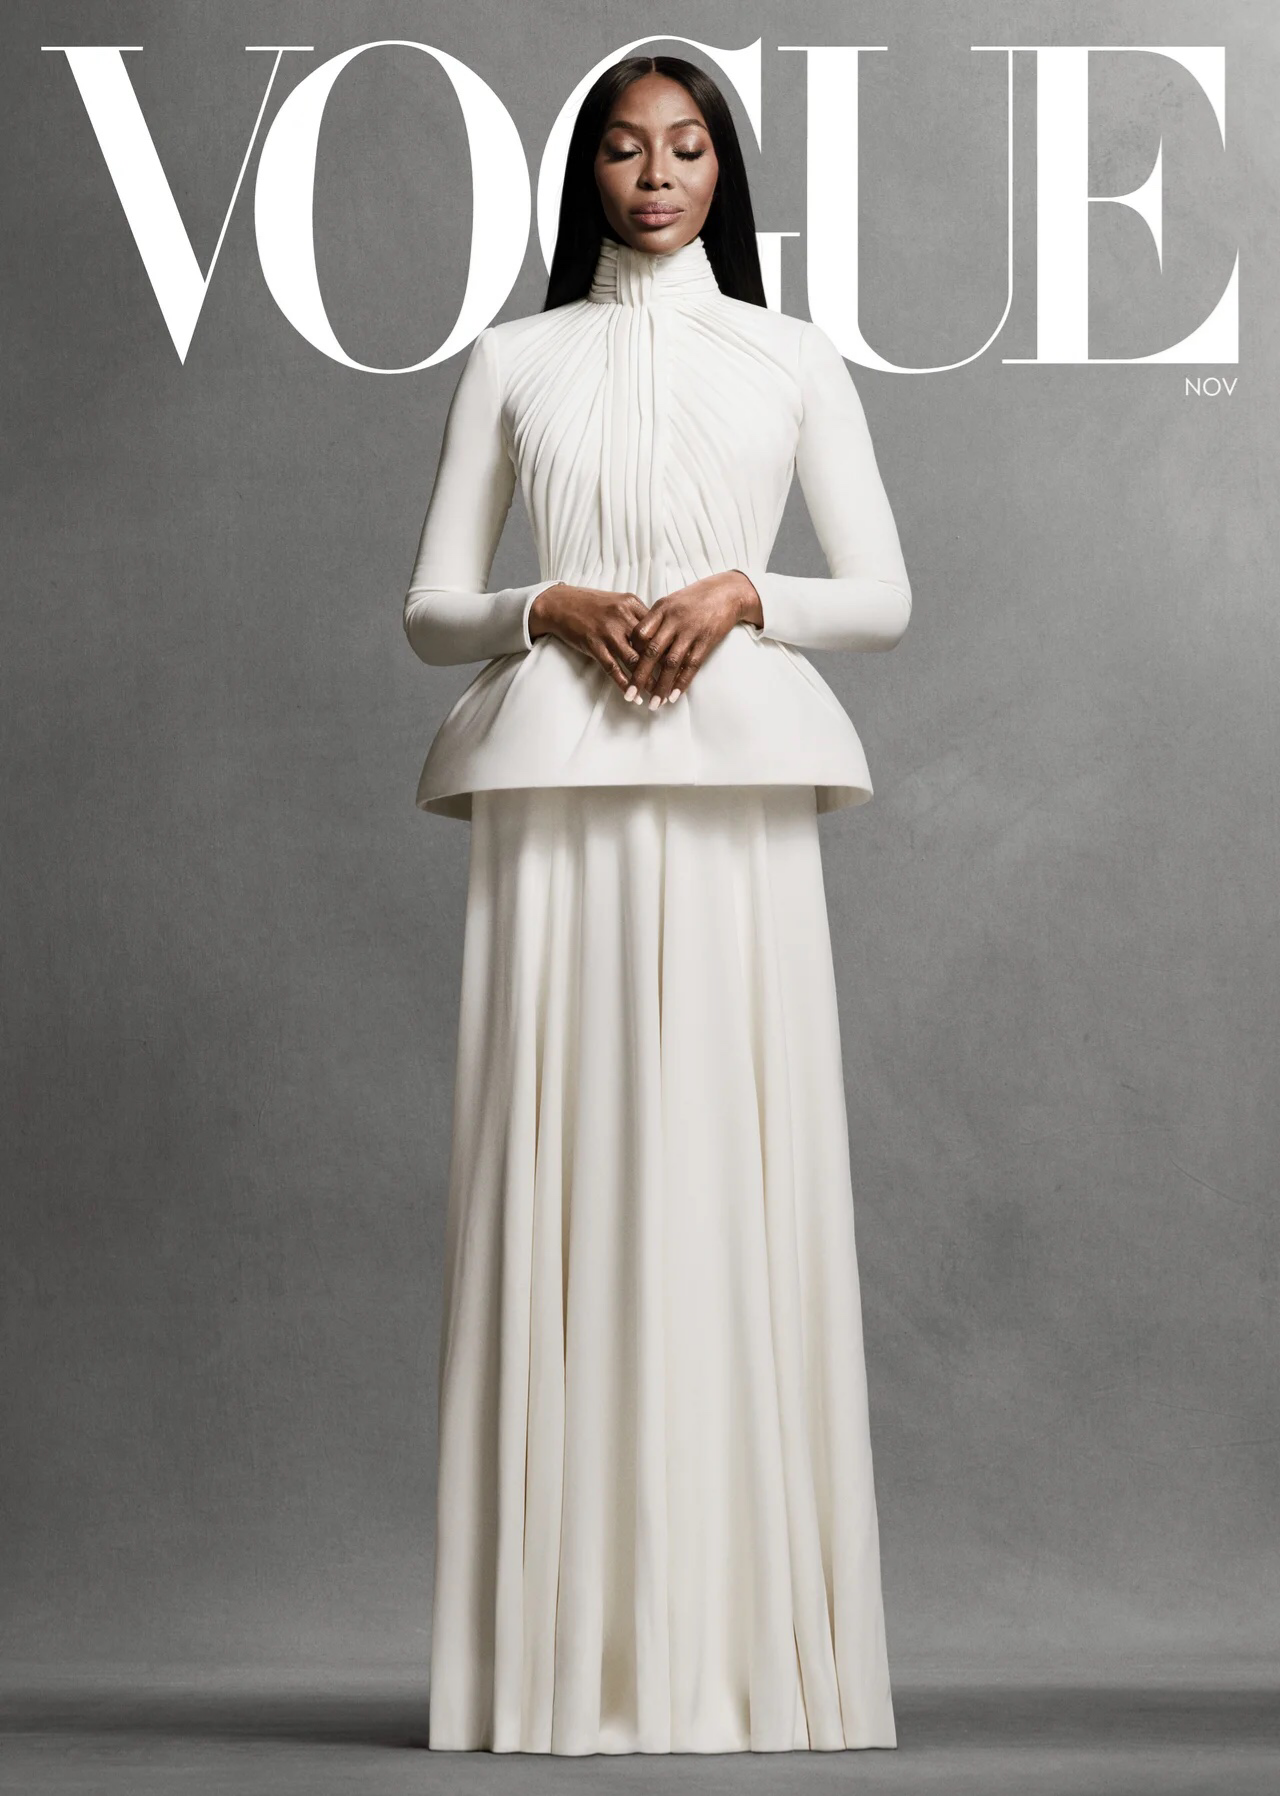 Naomi-Campbell-Vogue-magazine-November-issue